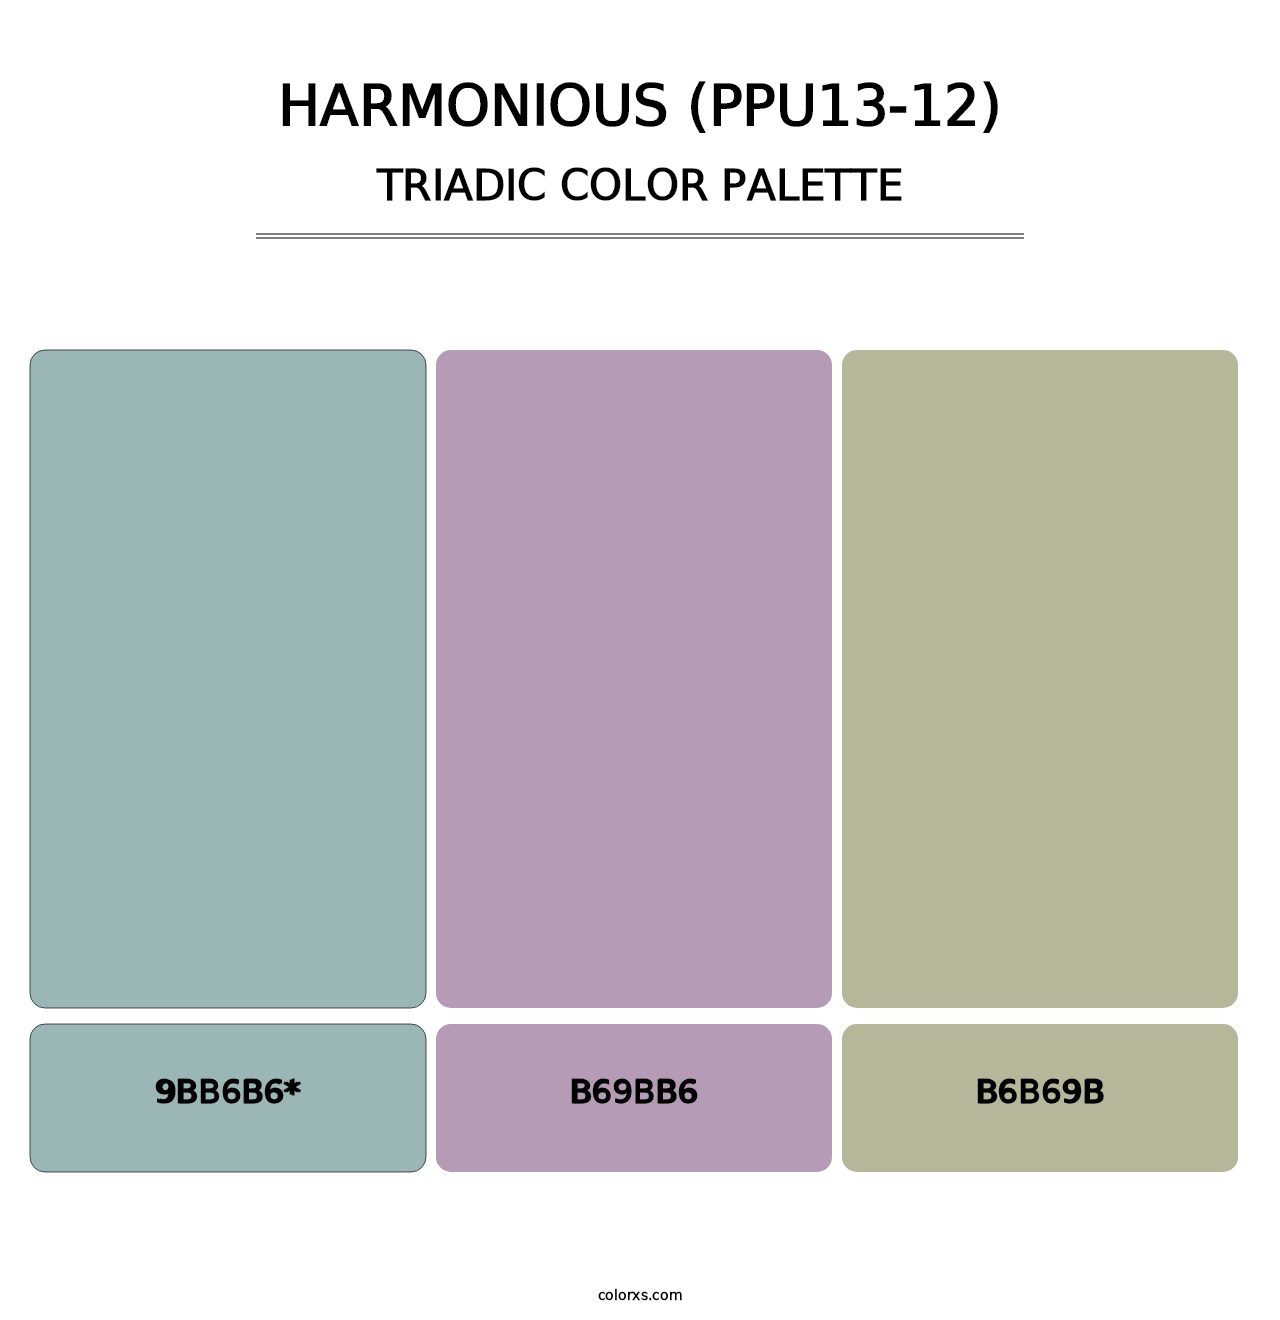 Harmonious (PPU13-12) - Triadic Color Palette